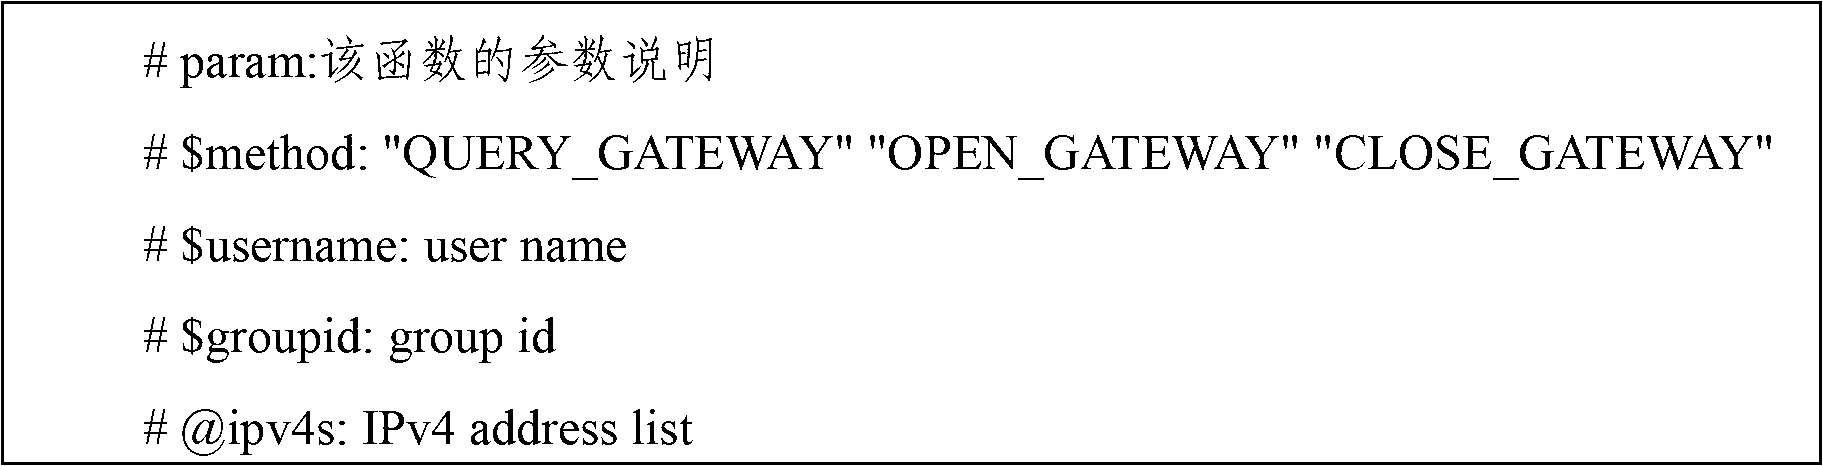 Gateway charging method based on IP (Internet Protocol) address detection